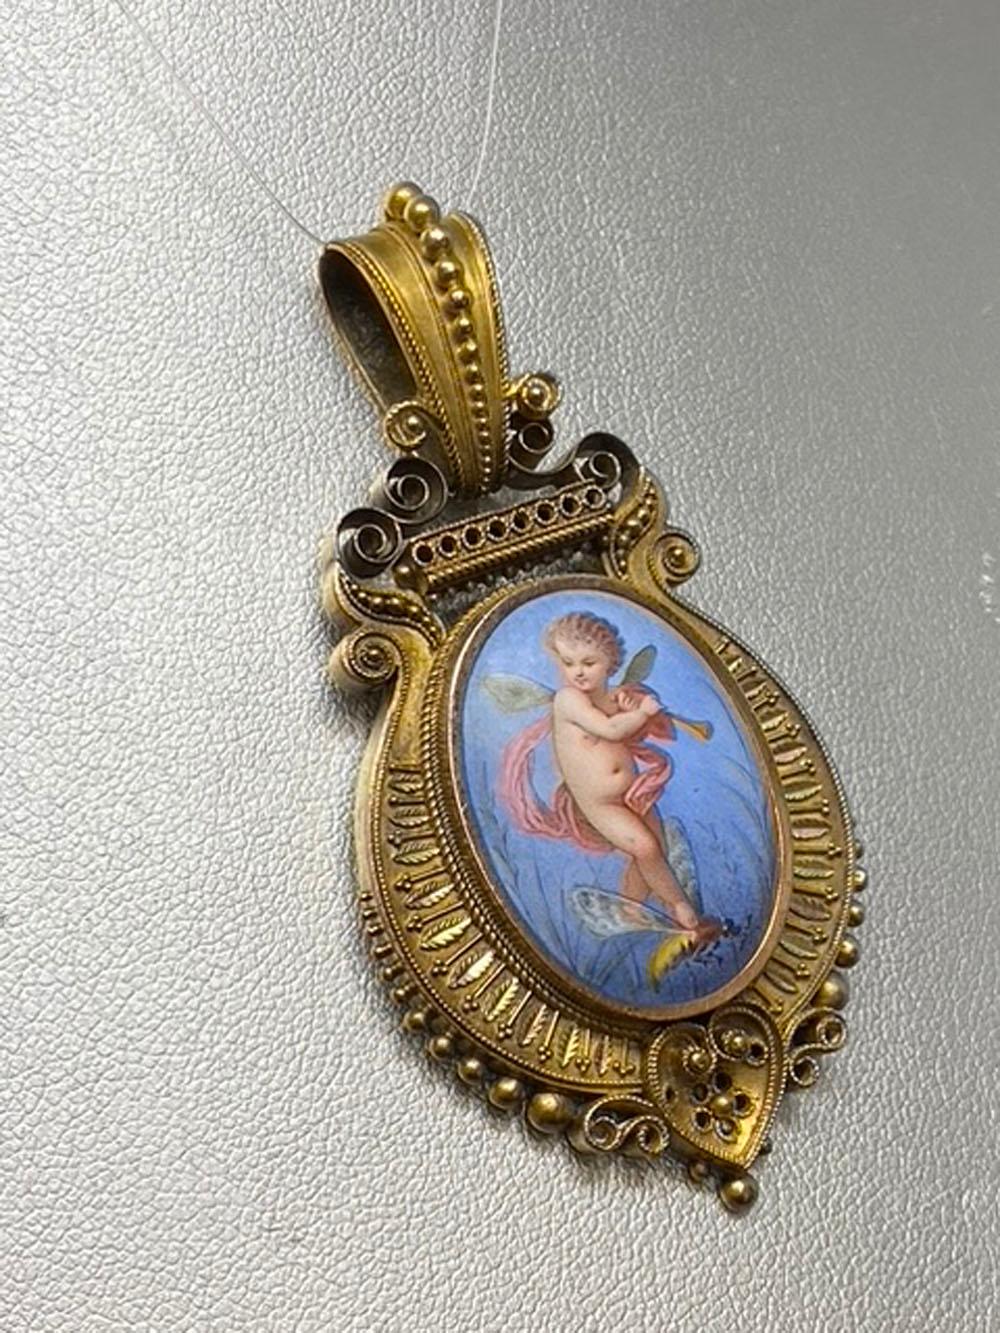 Unknown Victorian Etruscan Revival 14-Karat Yellow Gold and Enamel Cupid Pendant Locket